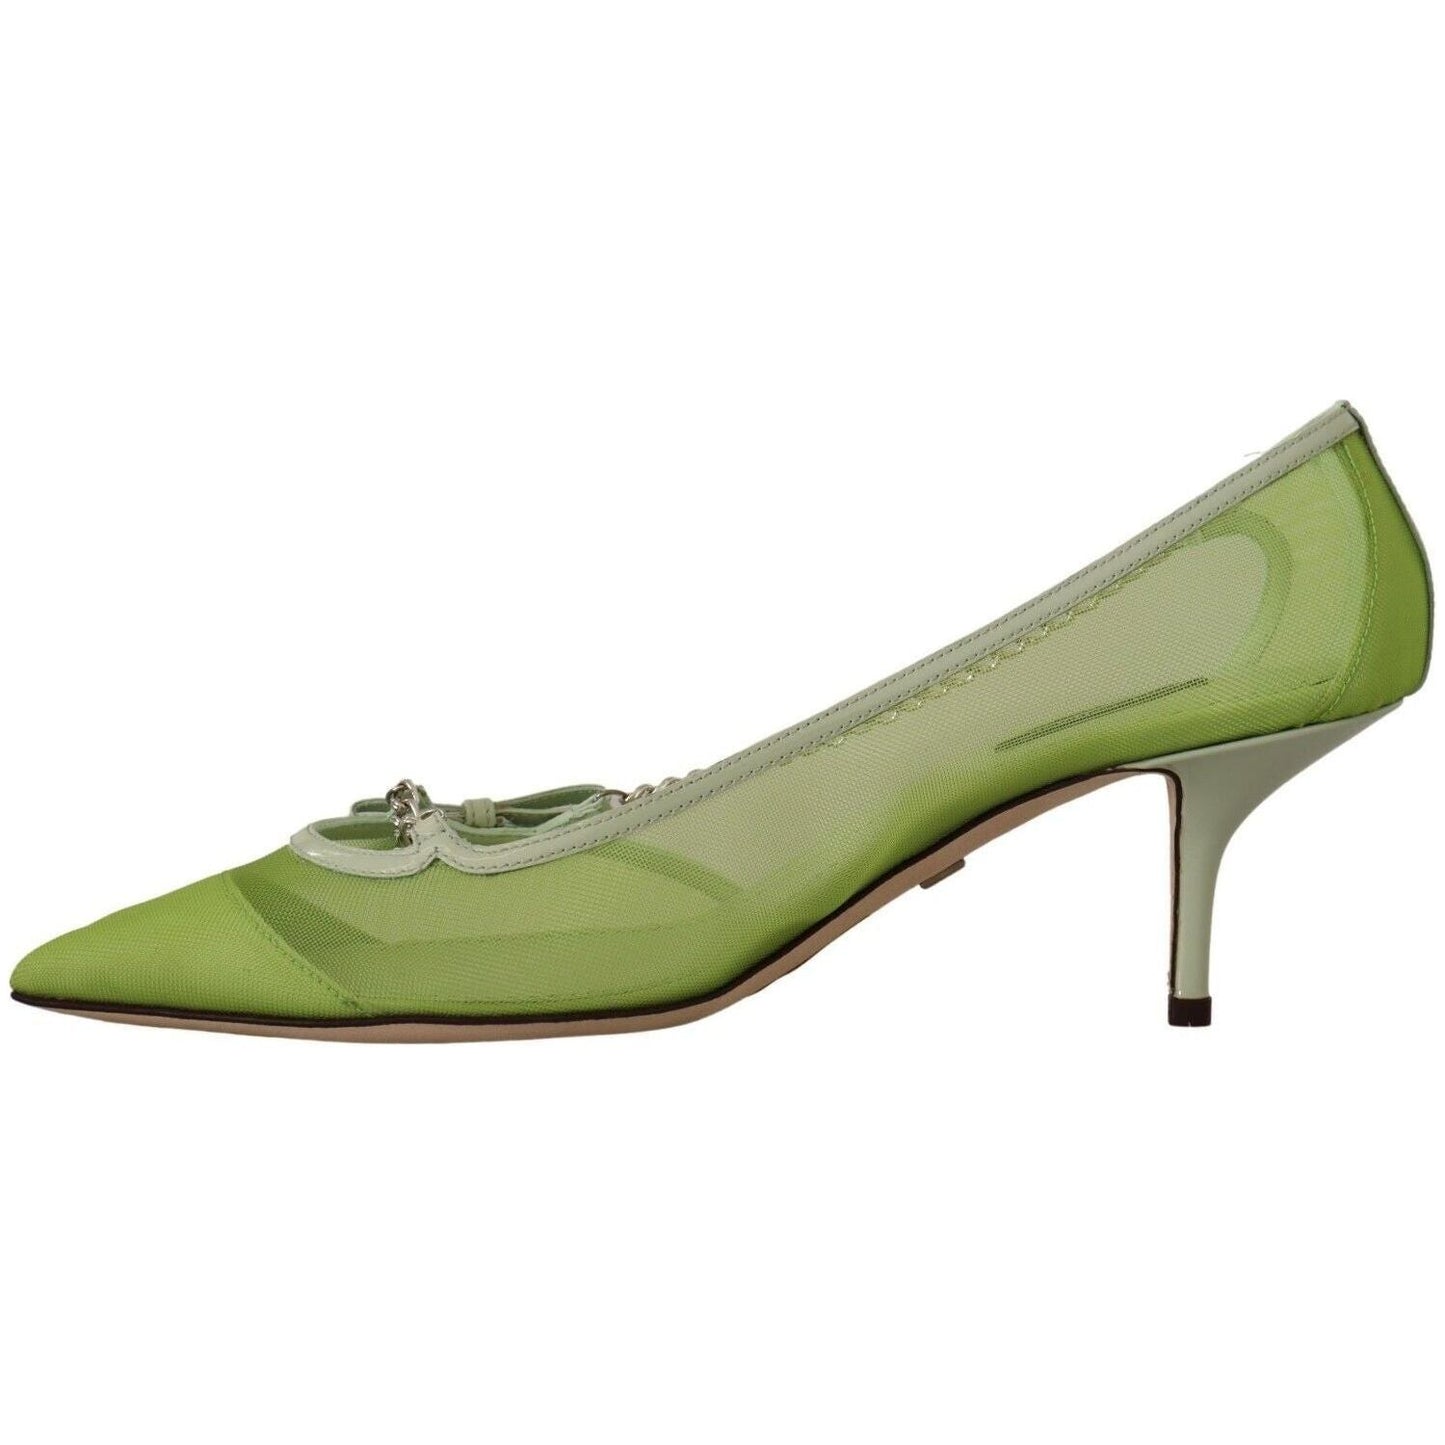 Dolce & Gabbana Enchanting Green Mesh Chain Pumps green-mesh-leather-chains-heels-pumps-shoes s-l1600-4-66-9983b232-0e3.jpg